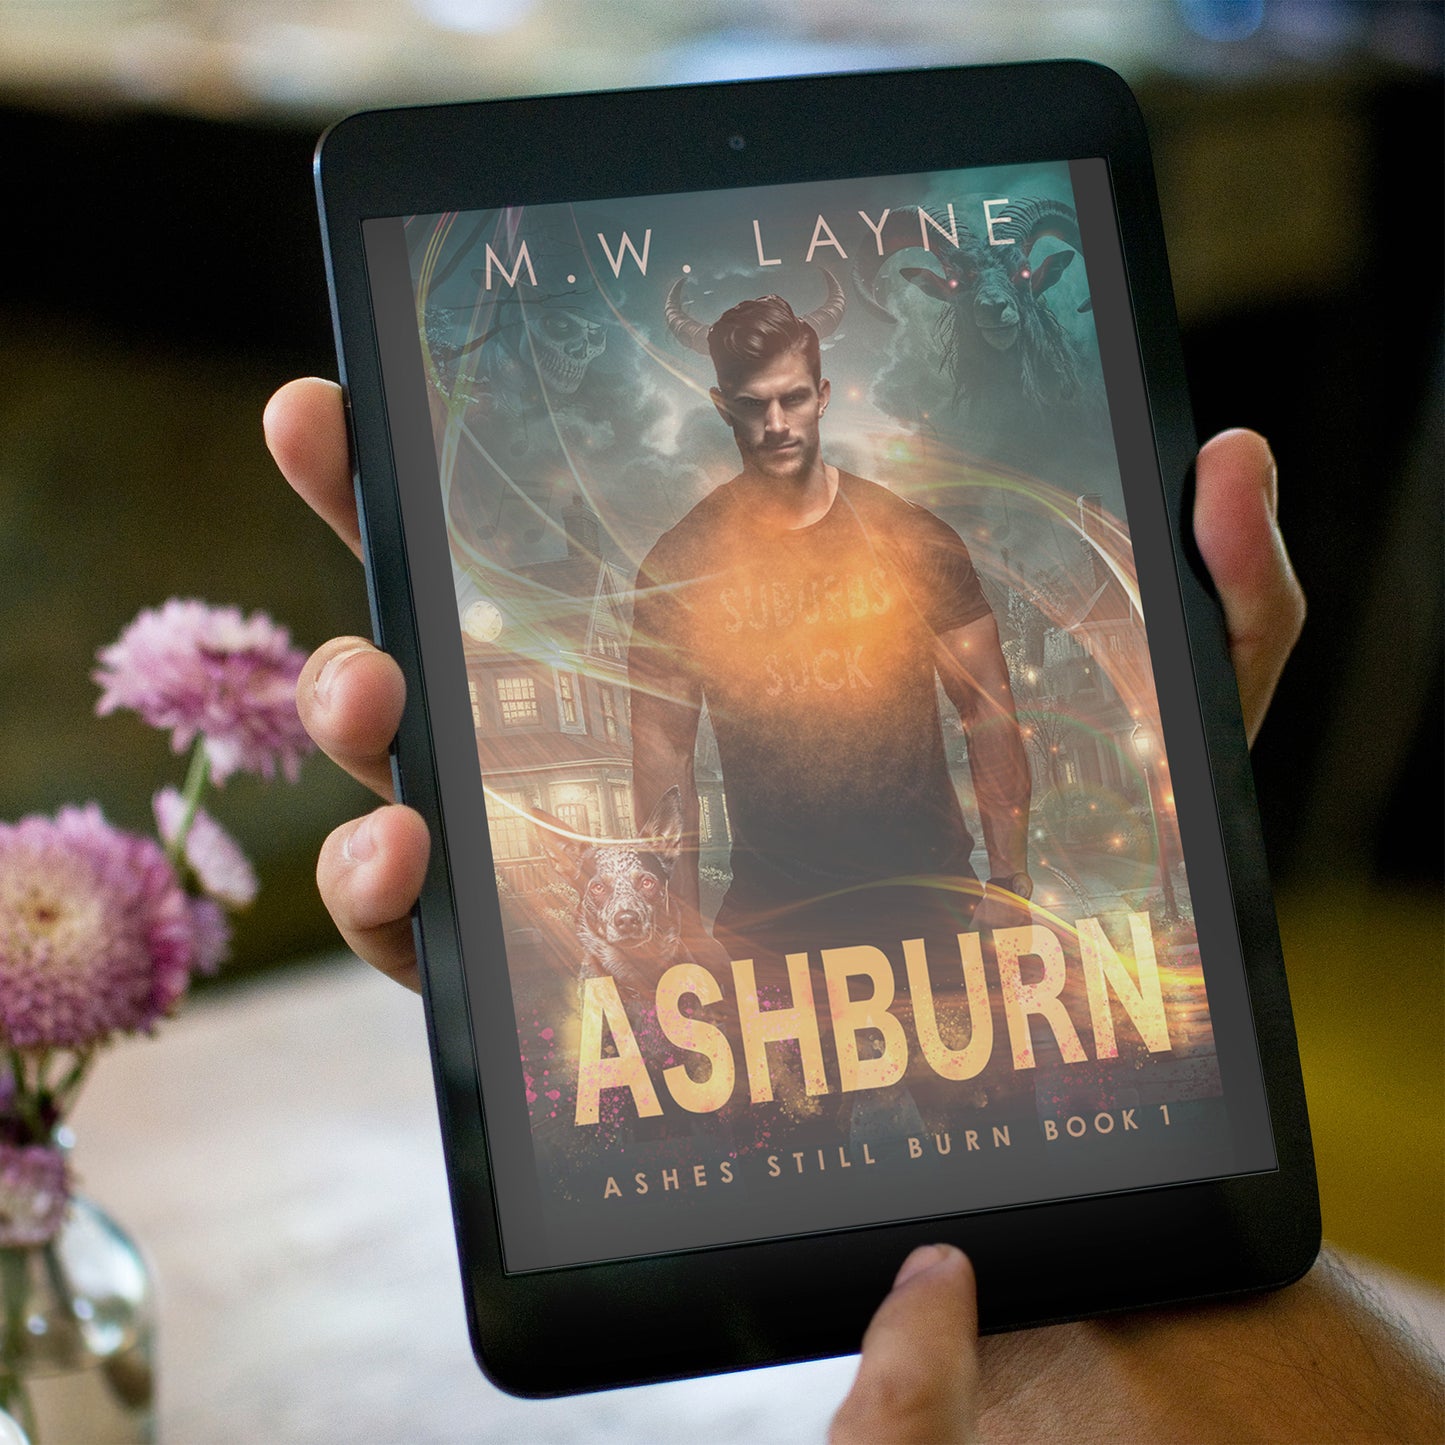 Cover for Ashburn novel shown on mini ipad